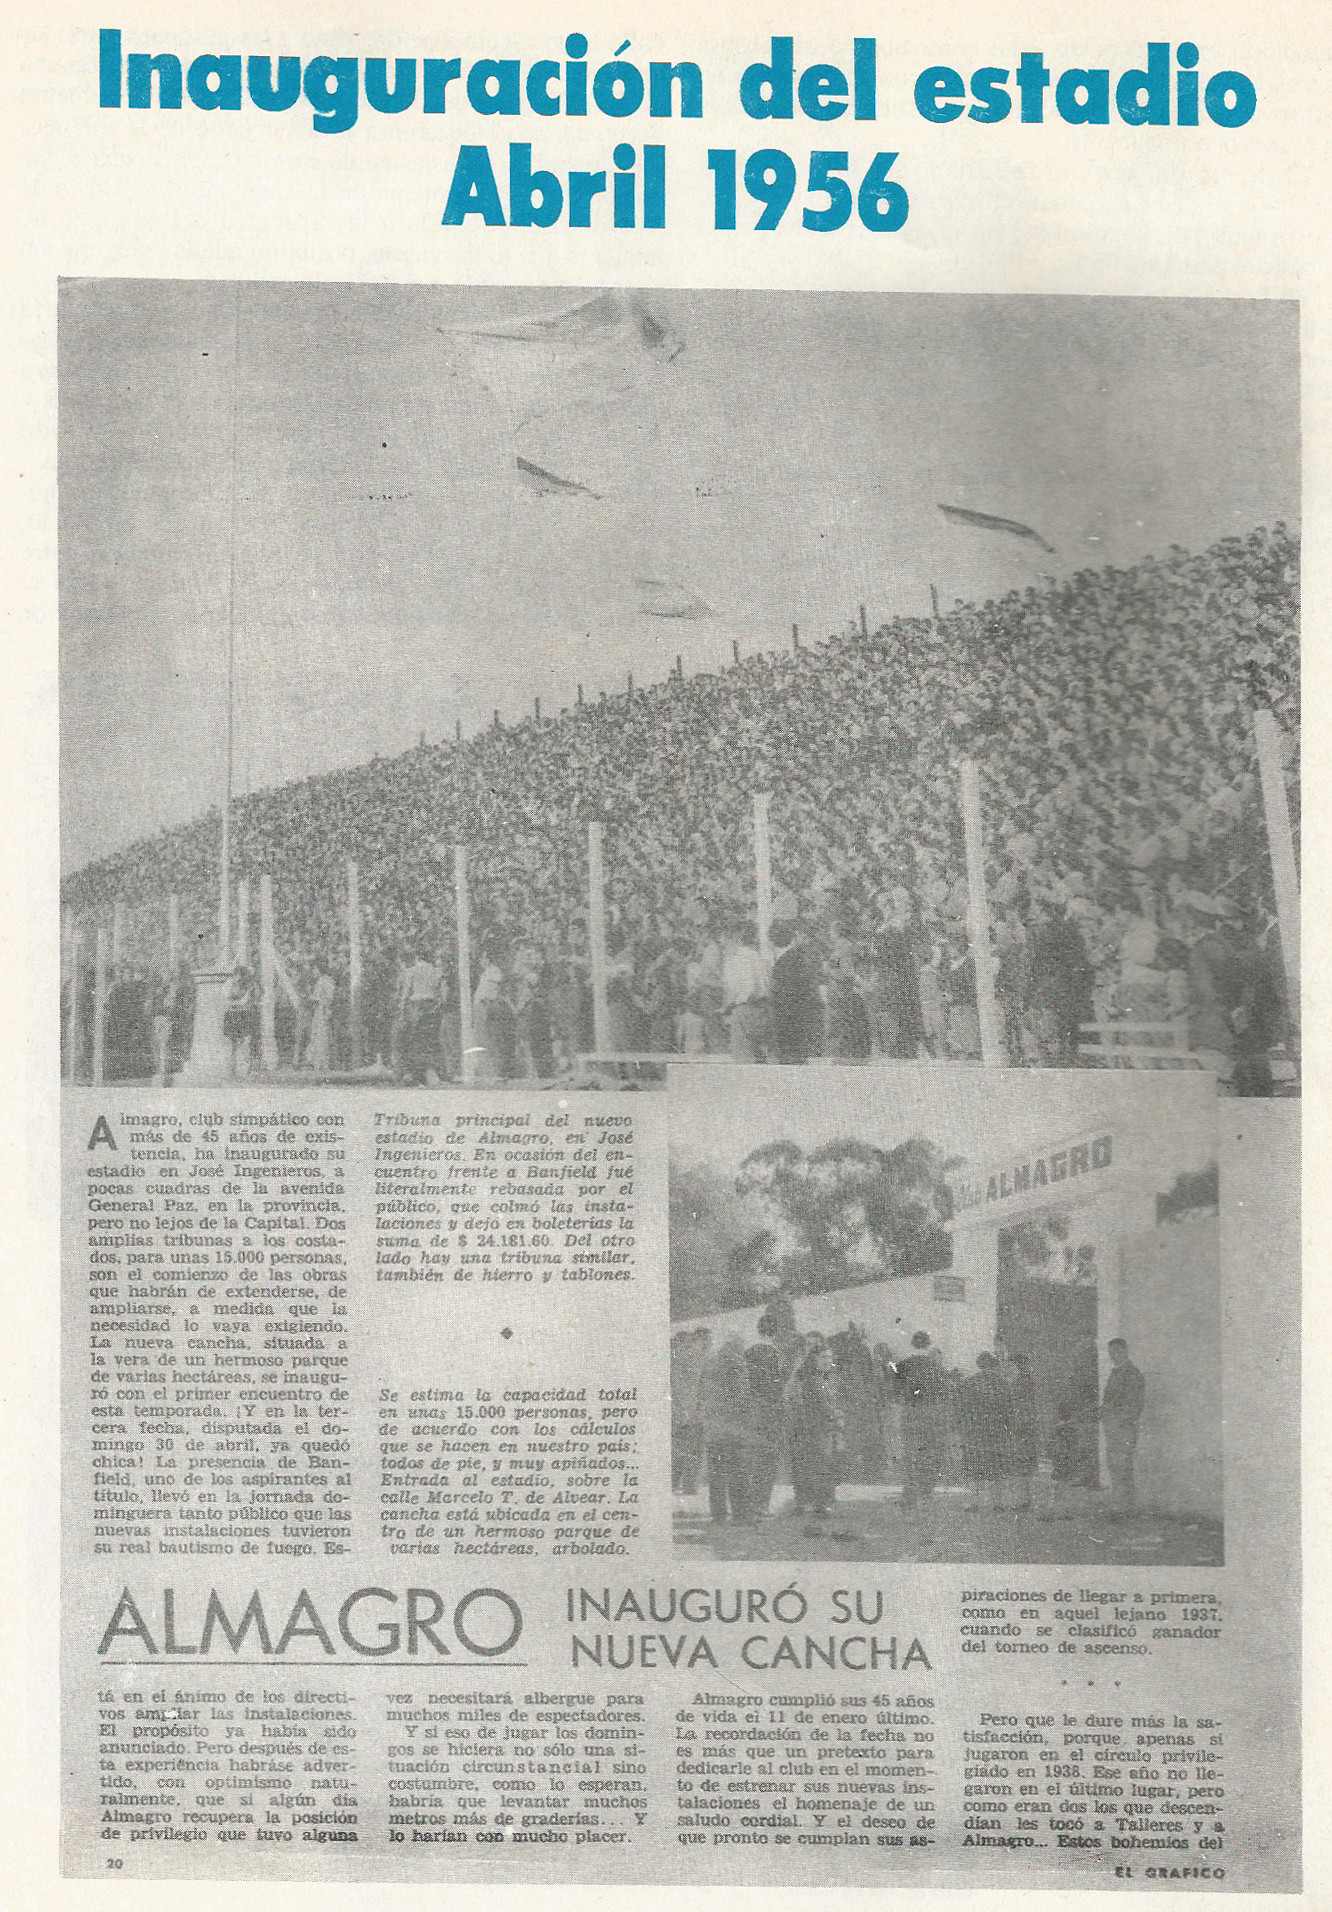 1956 inauguracion estadio